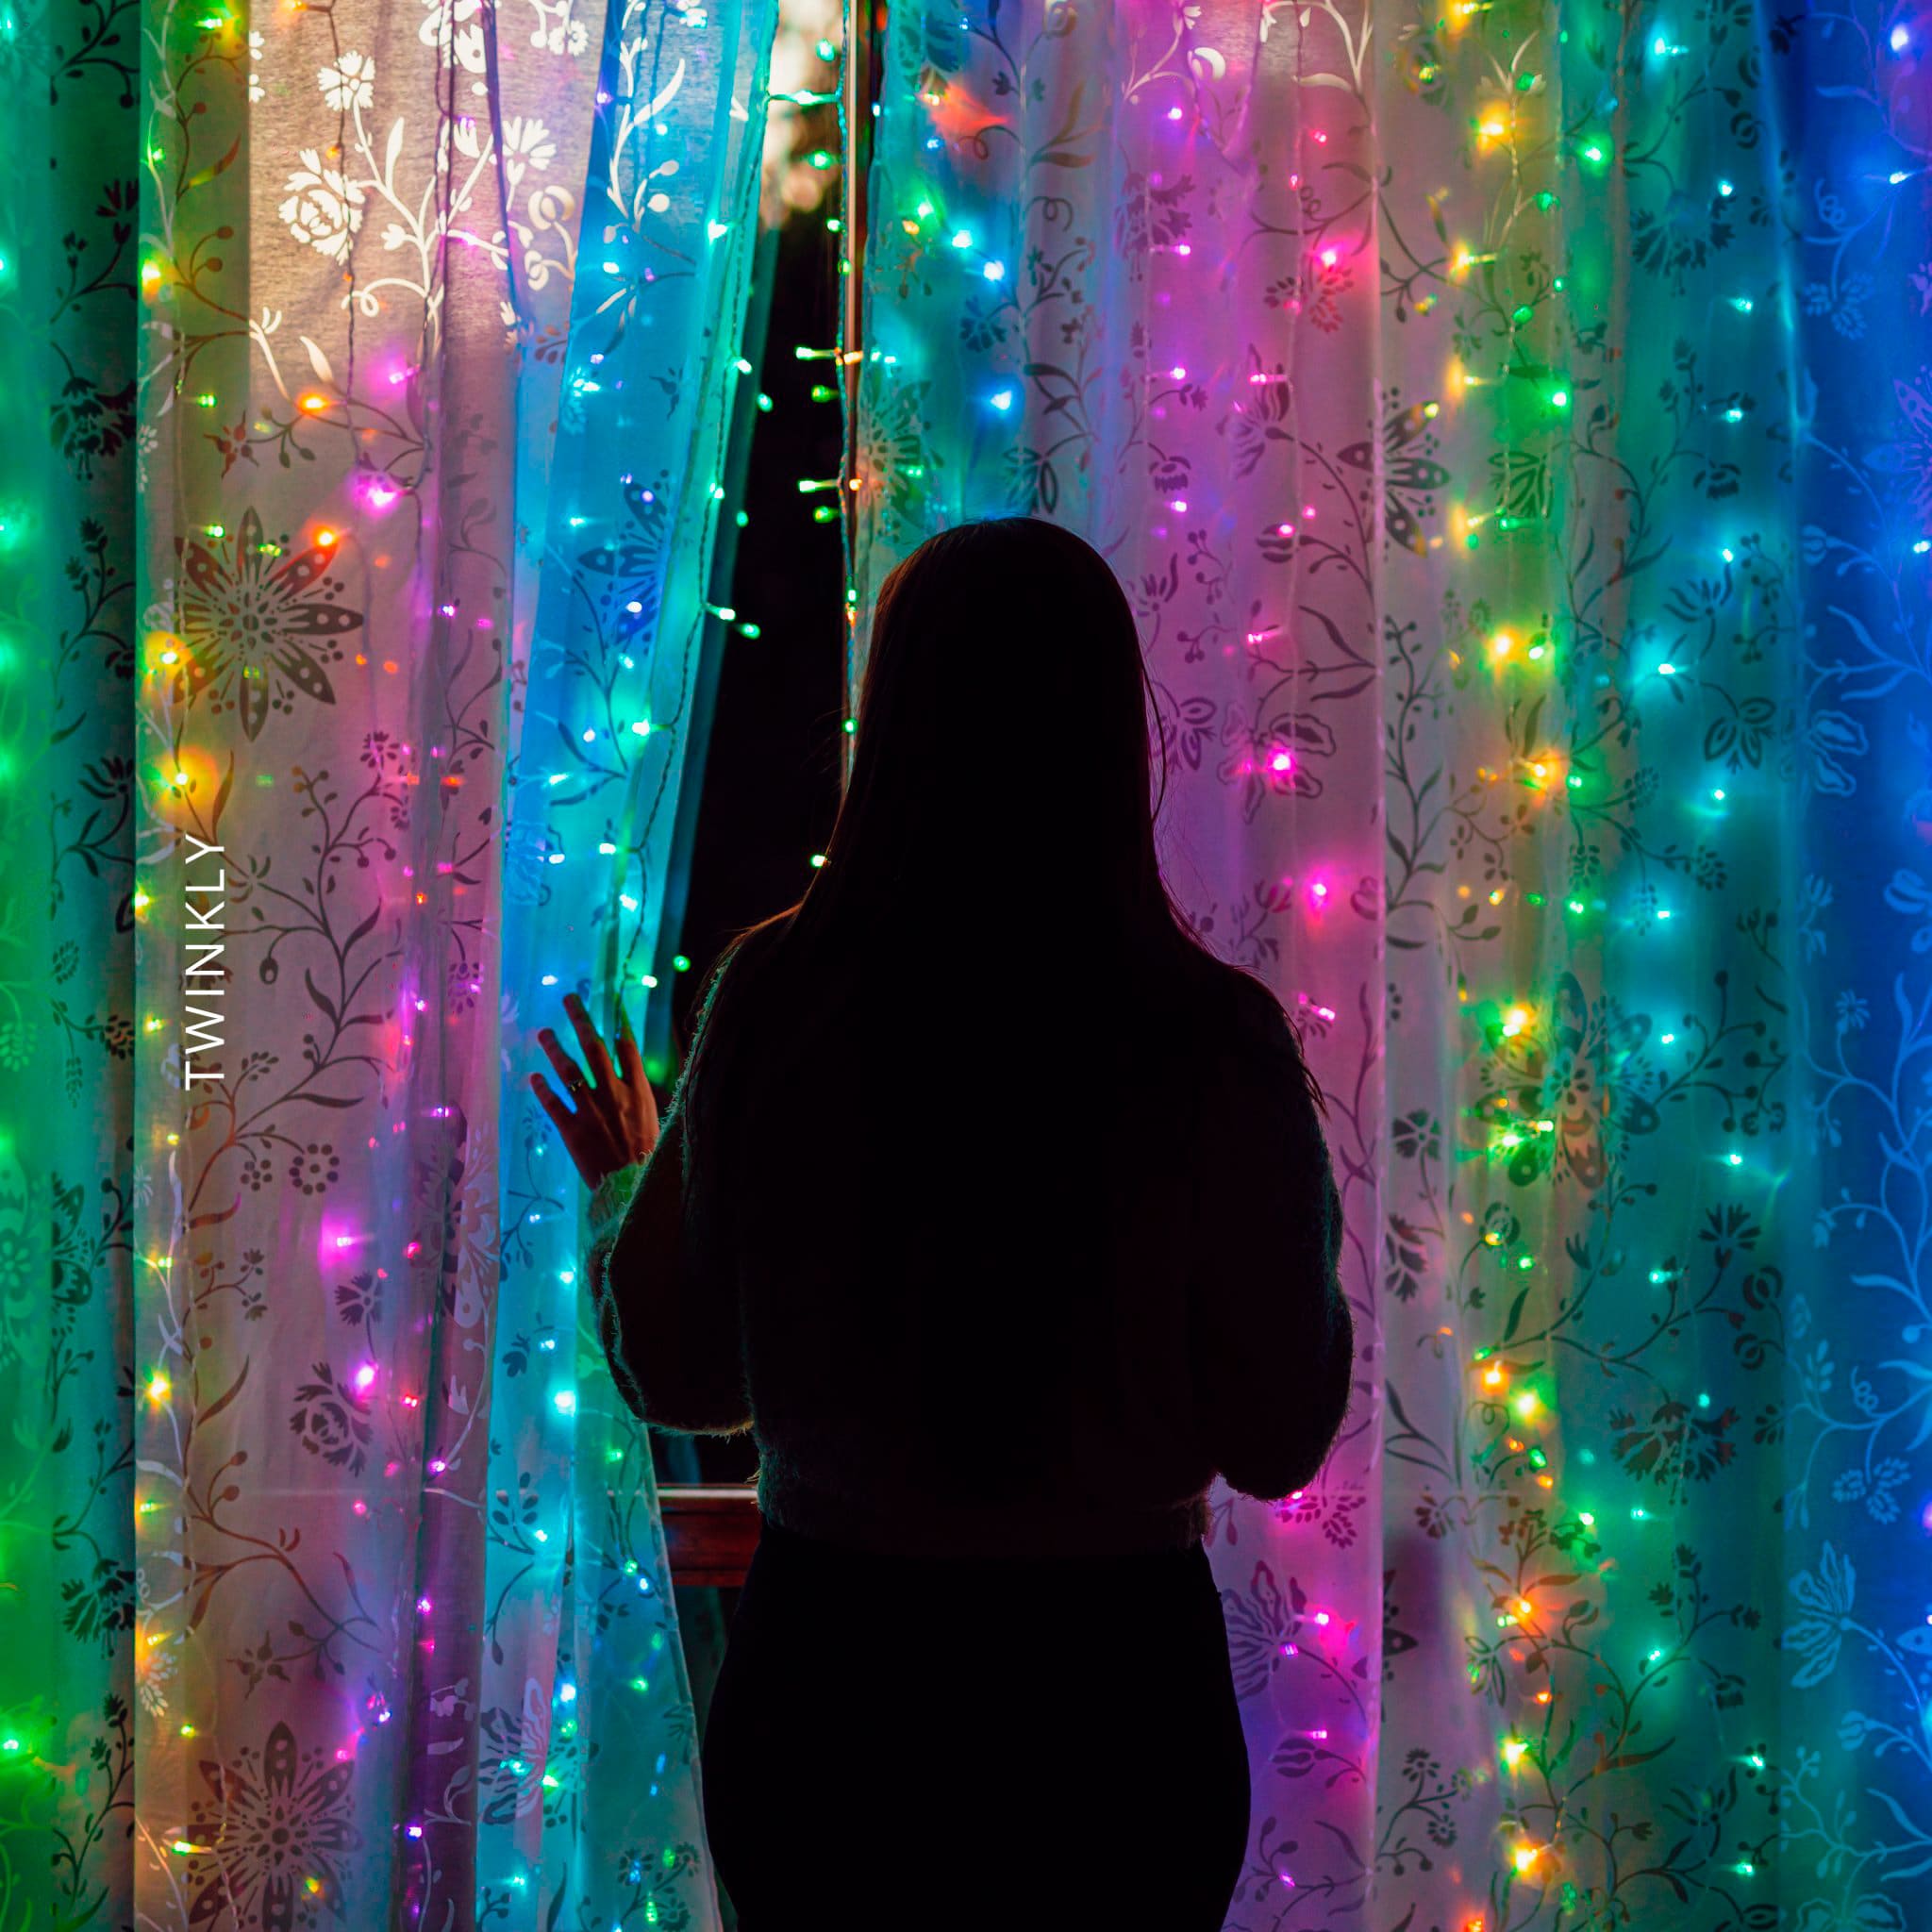 Фото — Гирлянда Twinkly Curtain 210 Multicolor LED (1x2.1м)